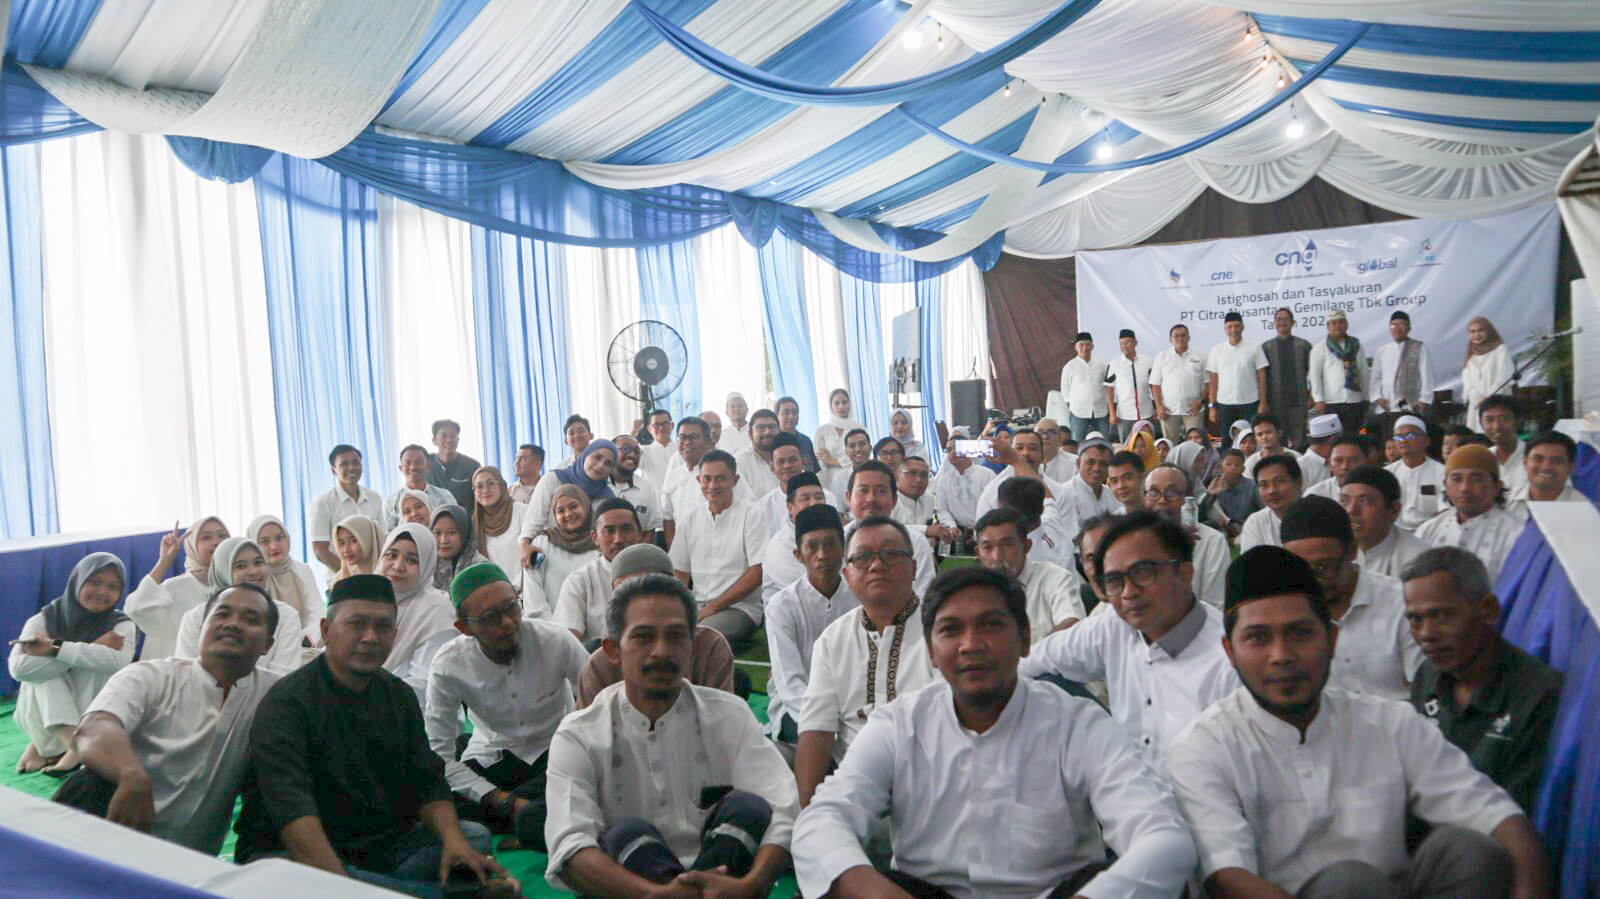 PT Citra Nusantara Gemilang Tbk Holds Tasyakur and Istighosah Event with Orphans